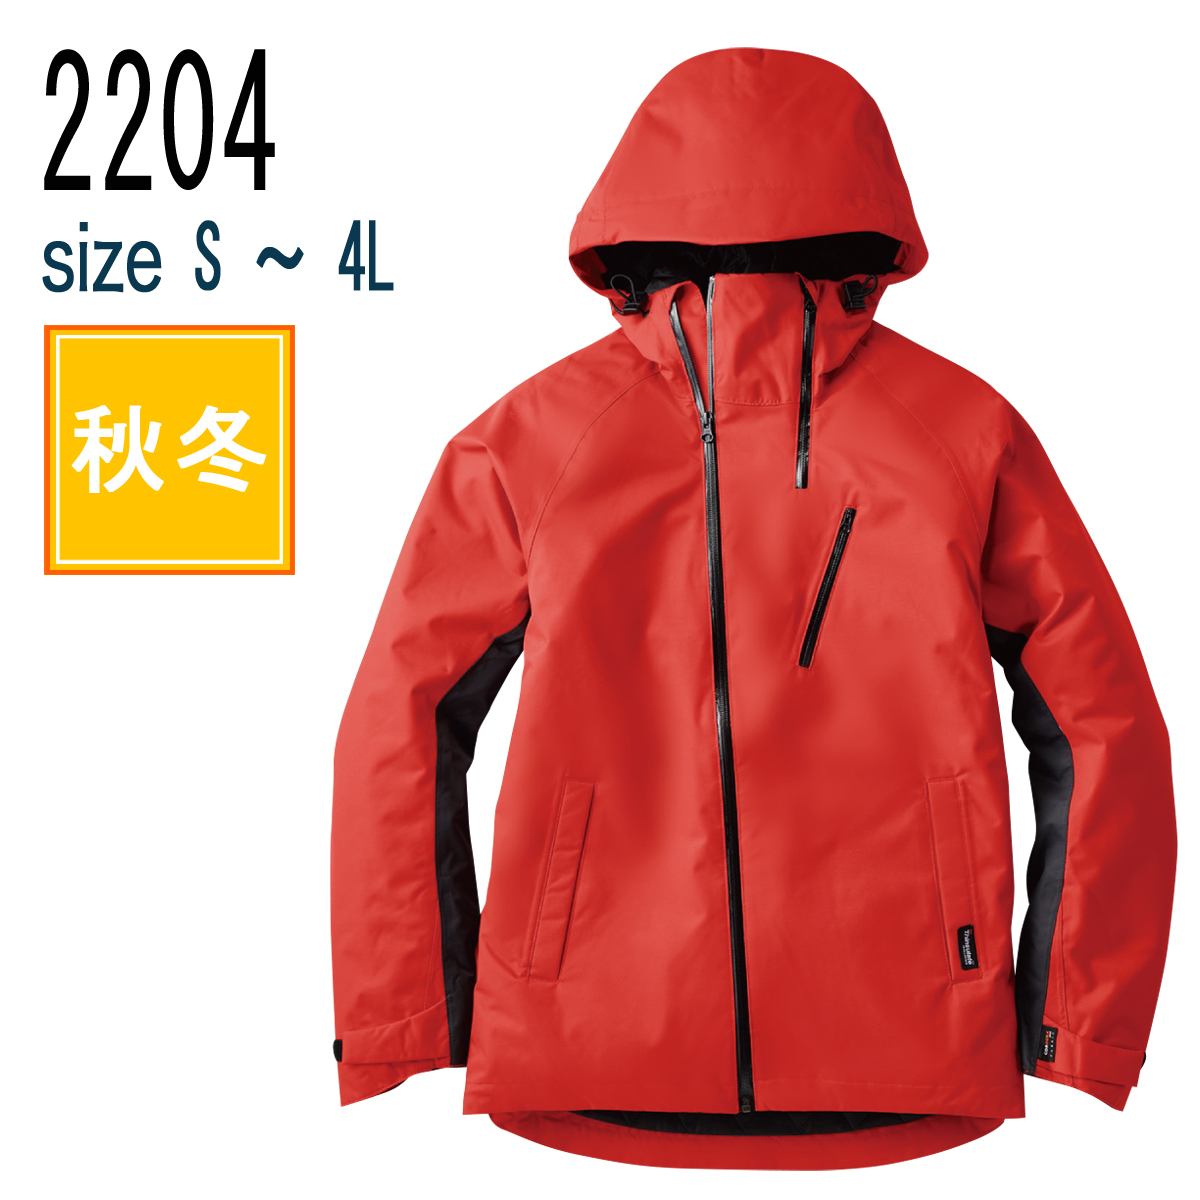 SOWA 防水防寒ジャケット チャコールグレー LLサイズ 2204 - 1